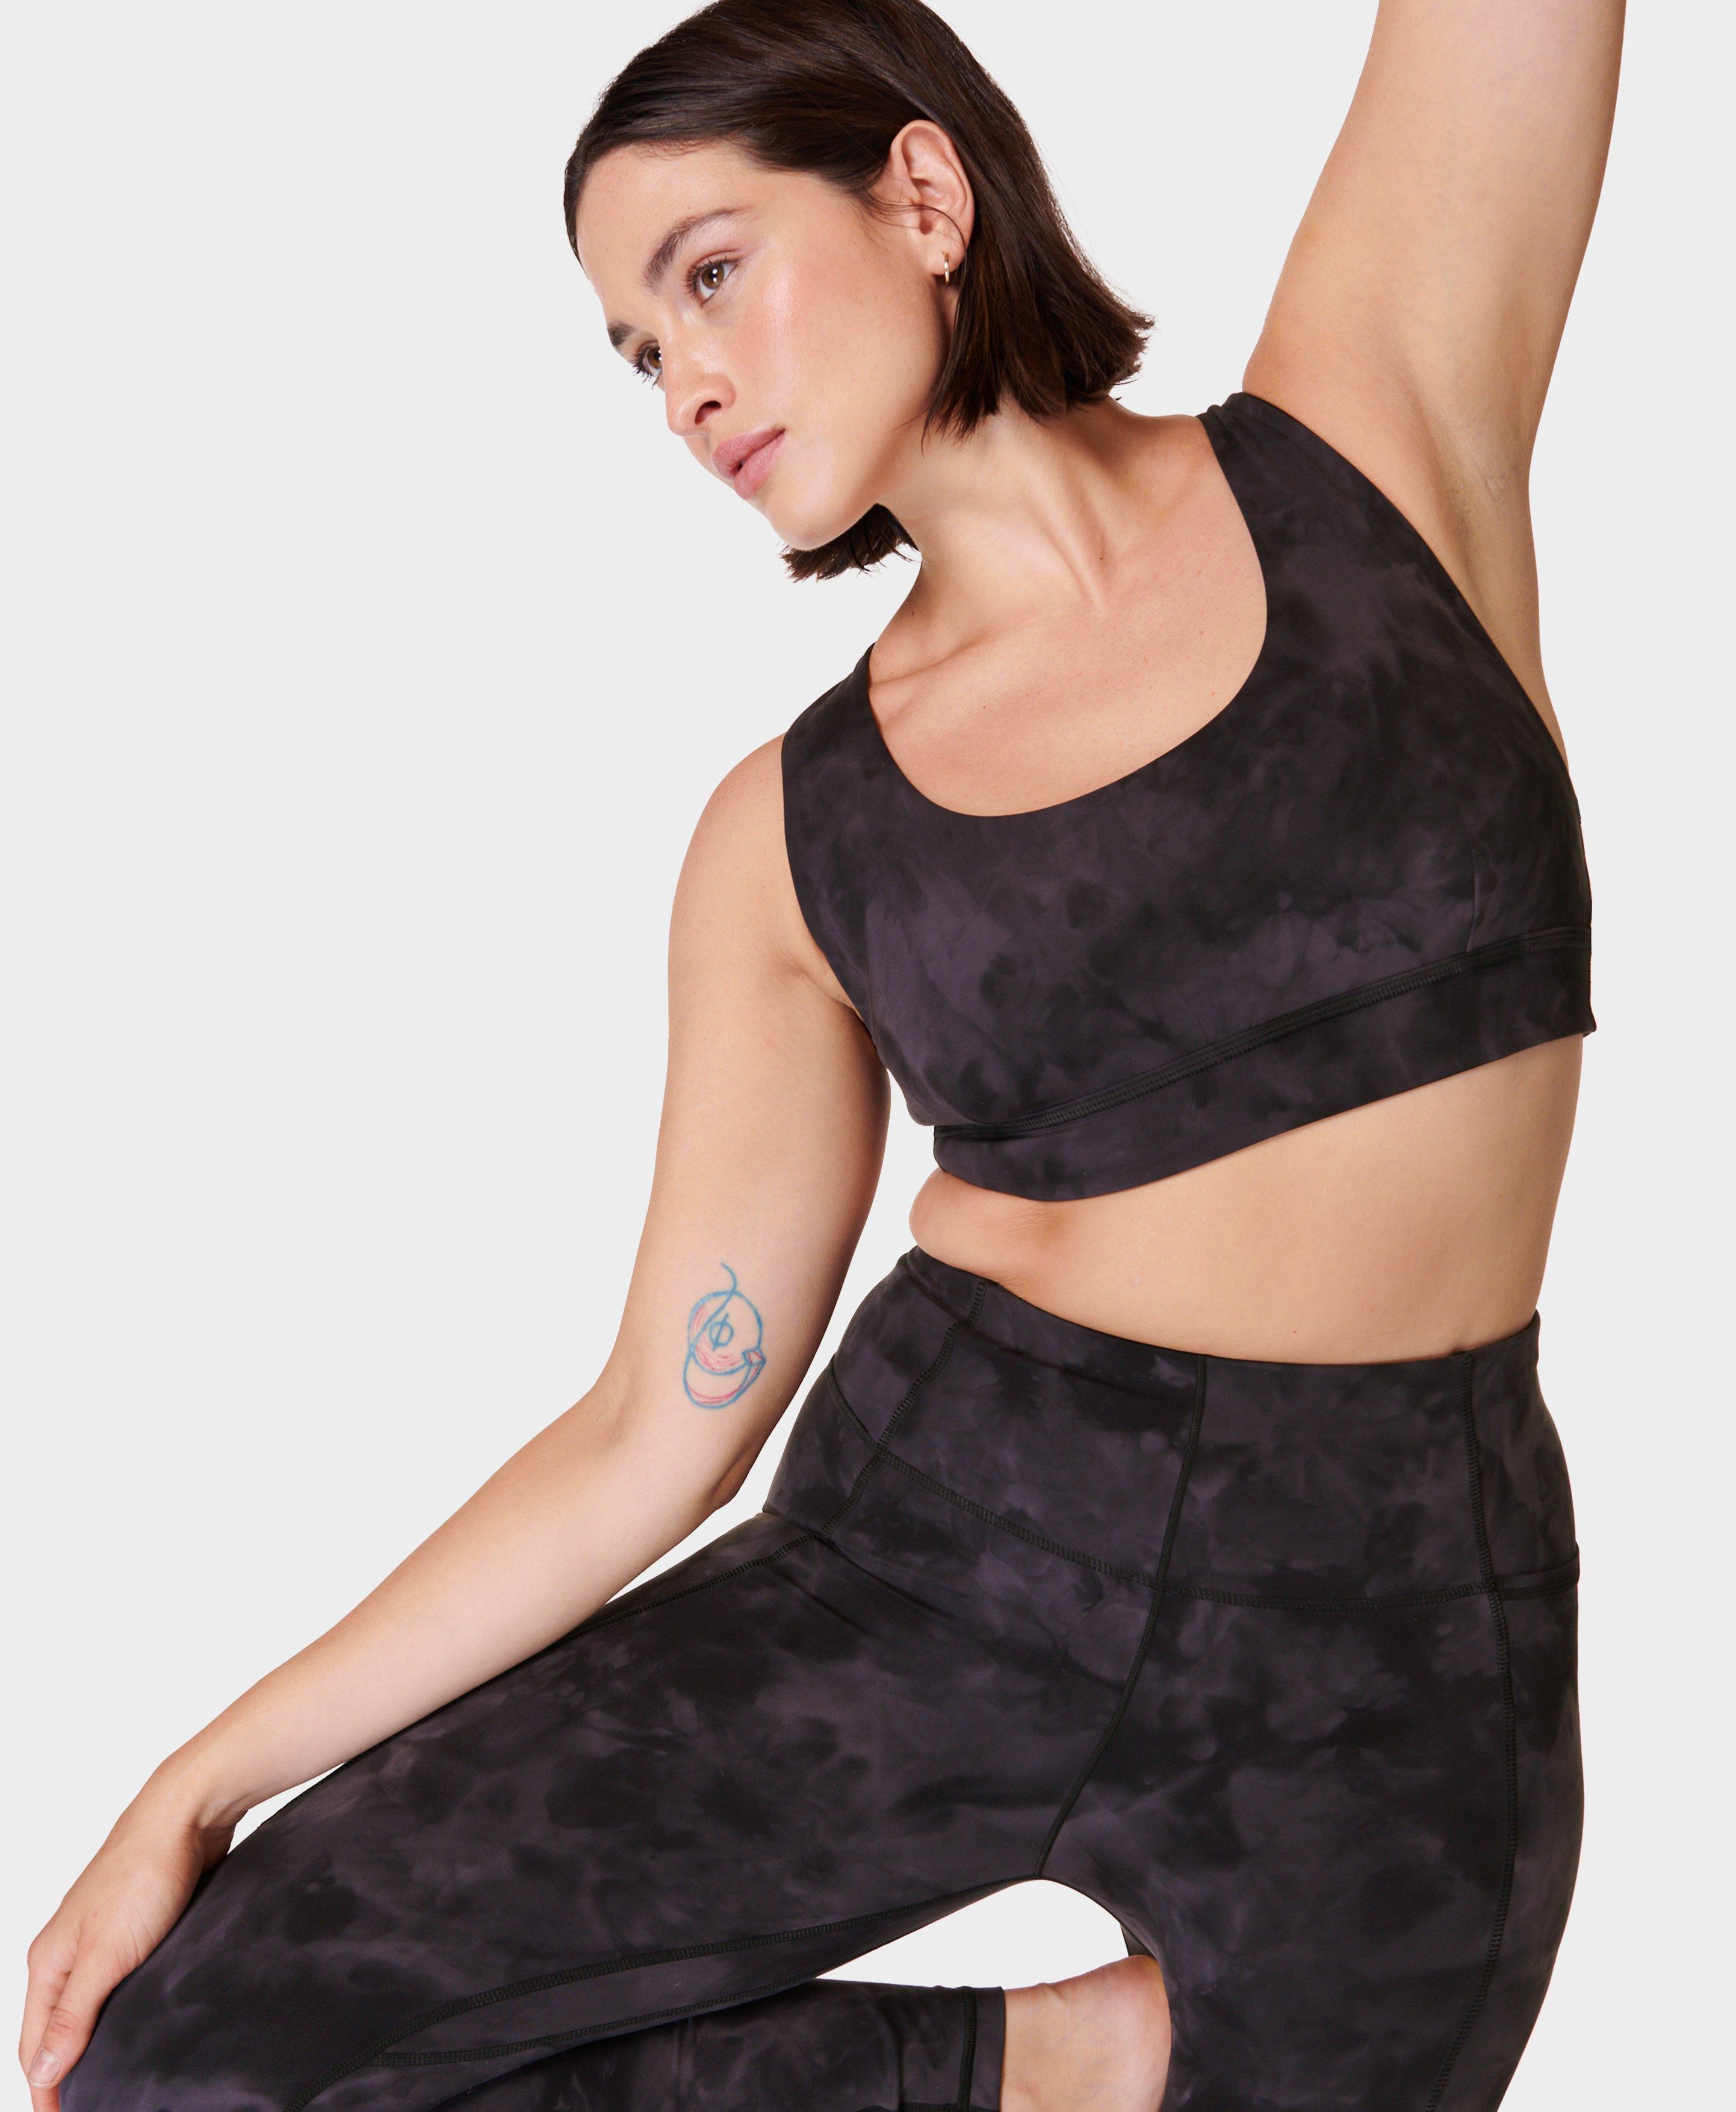 Super Soft Reversible Yoga Bra - Black BlackSprayDyePrint, Women's Sports  Bras